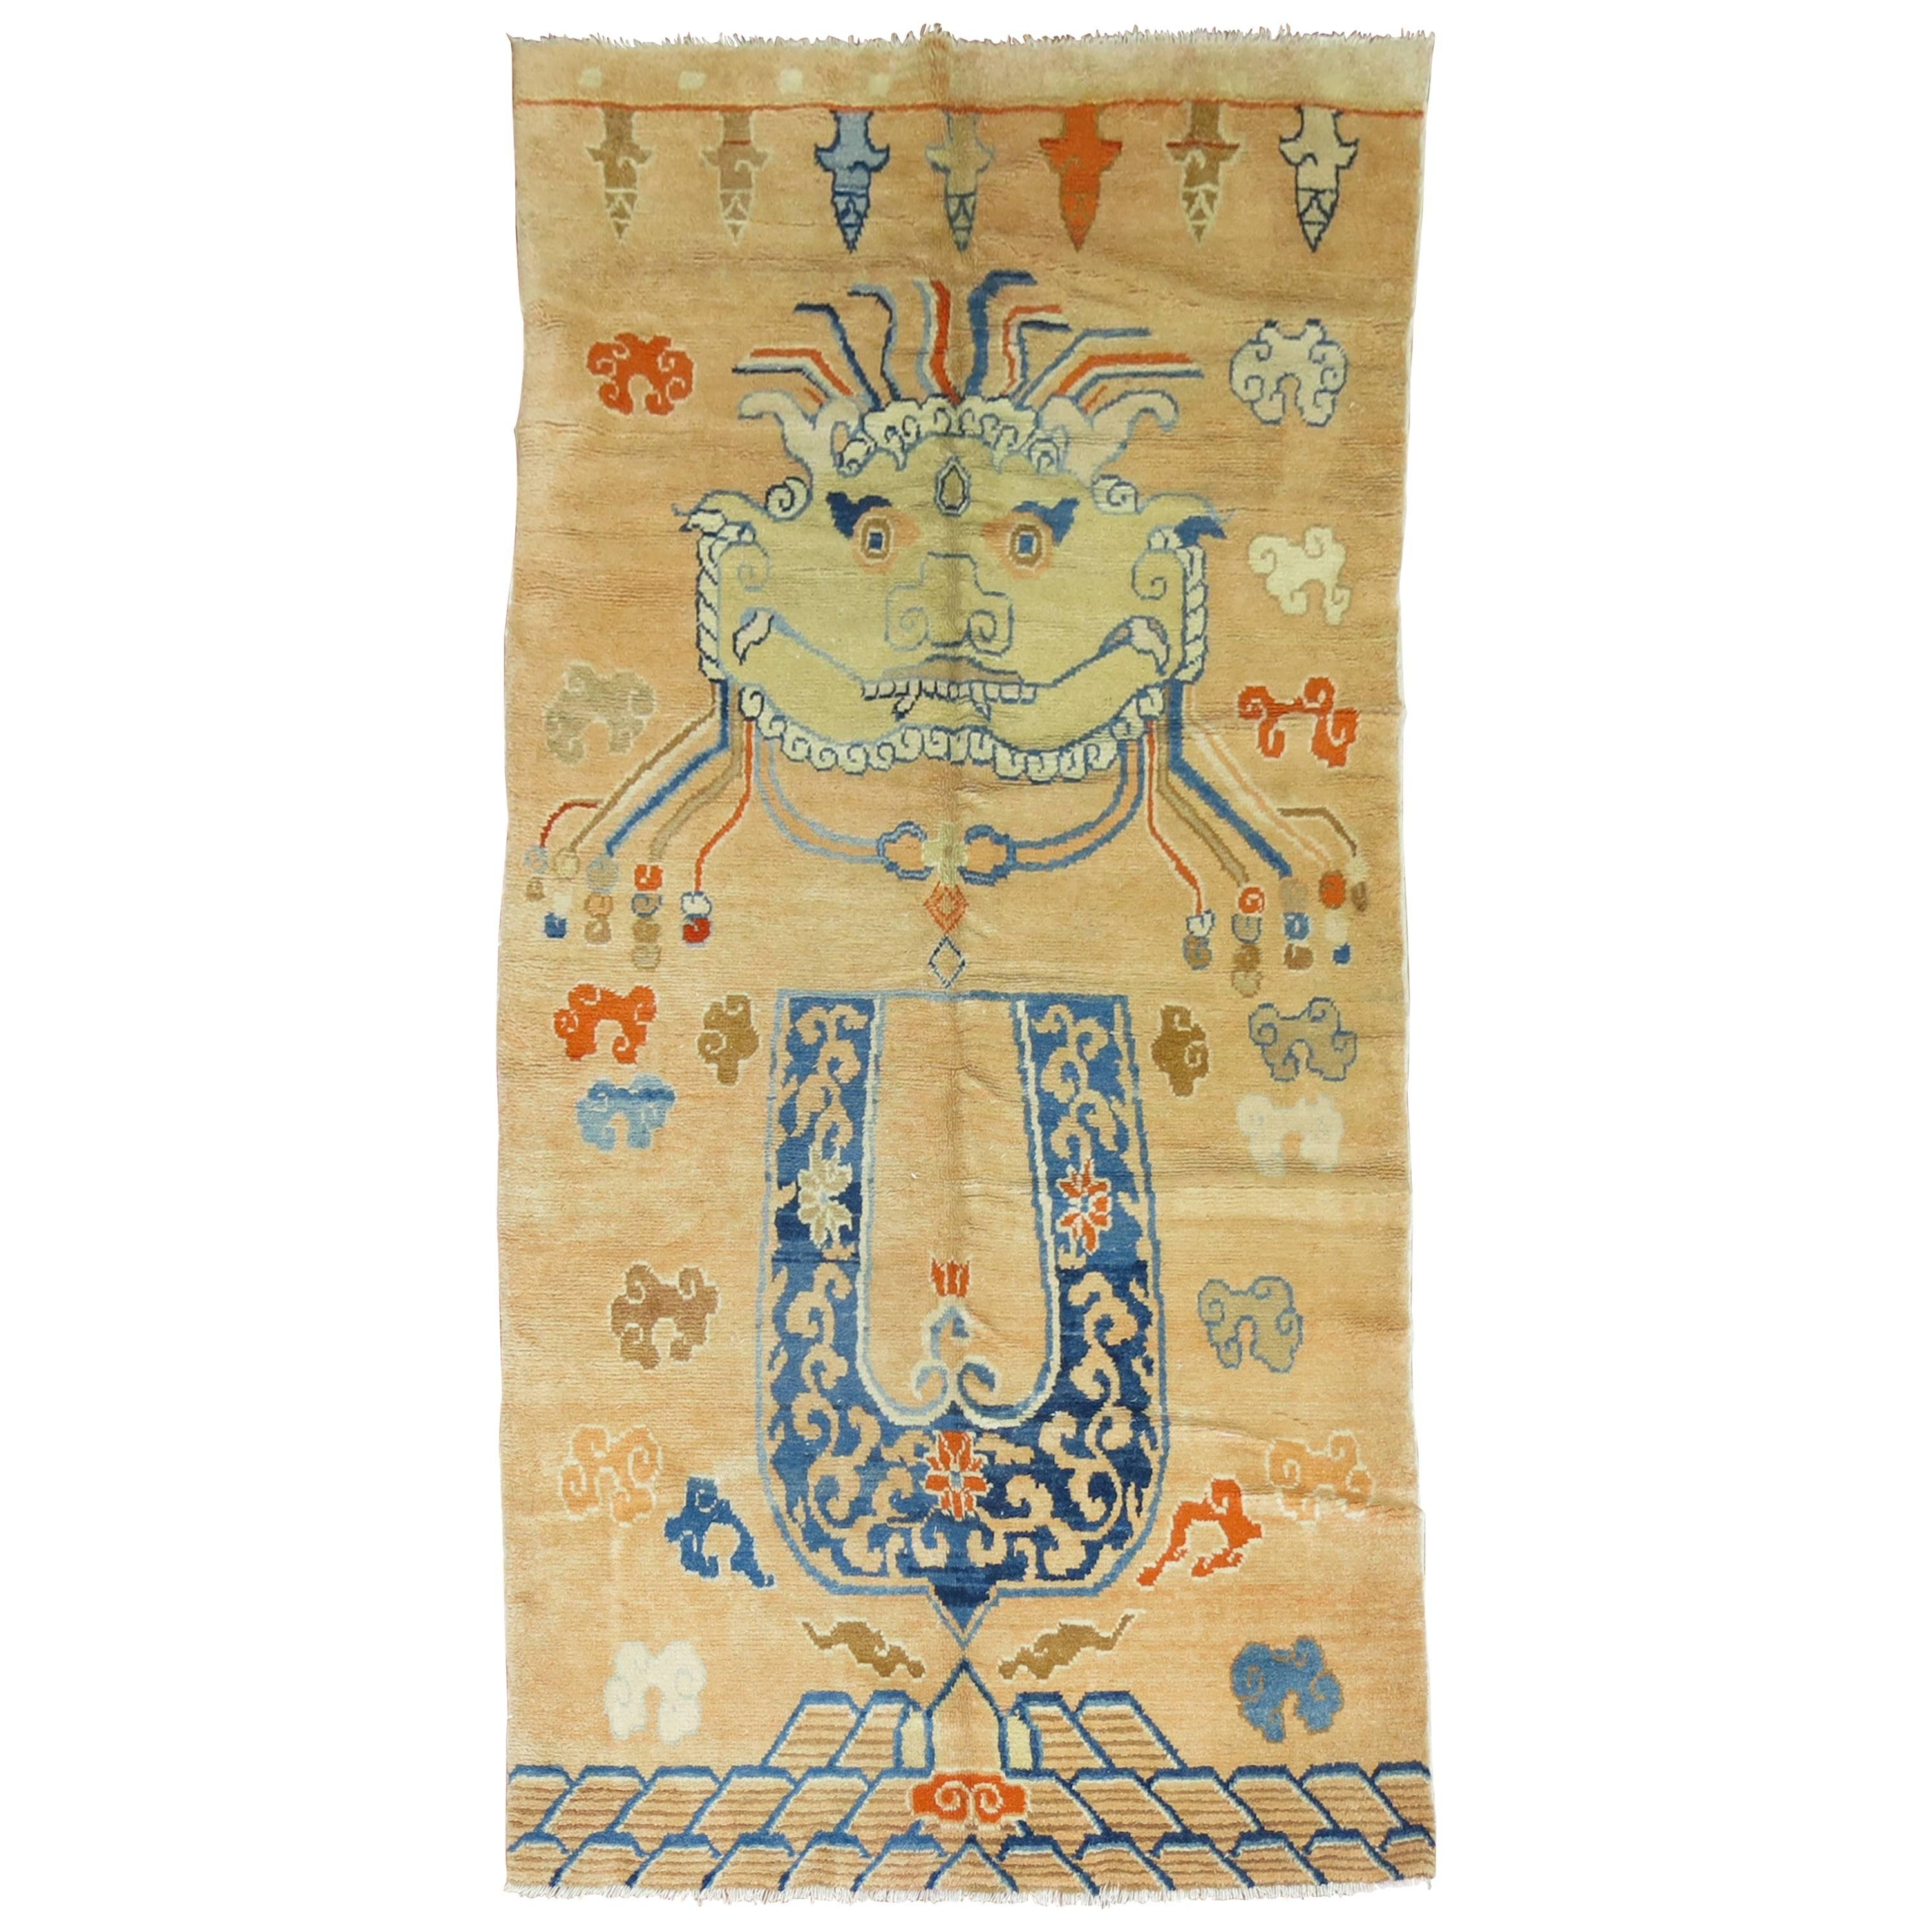 Pictorial Antique Tibetan Rug